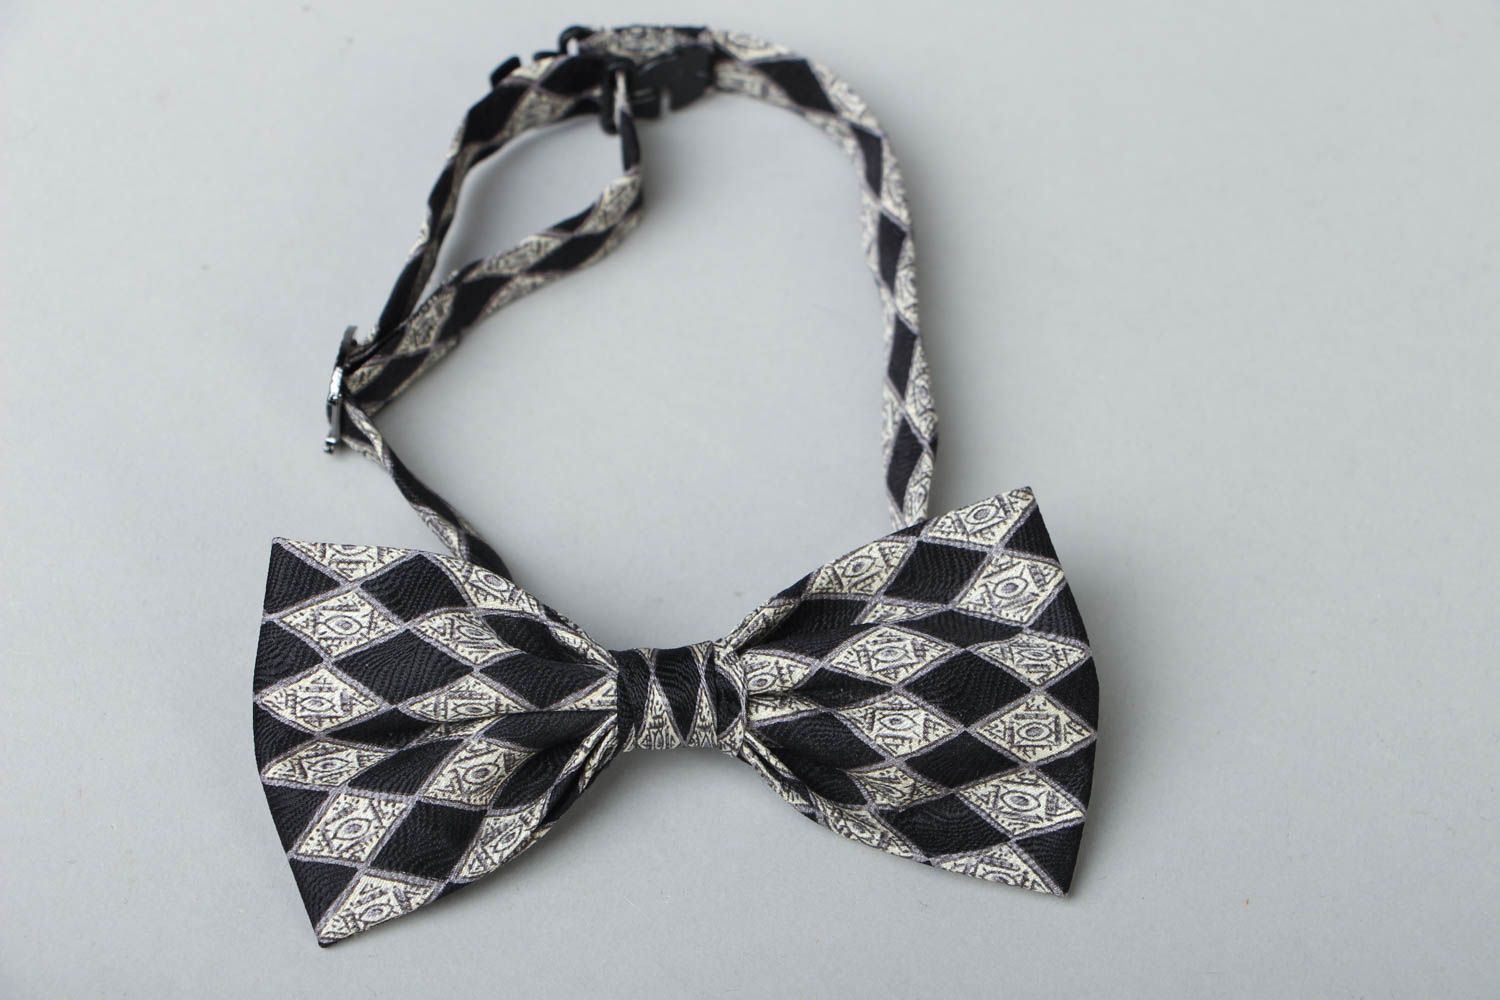 Homemade textile bow tie photo 1